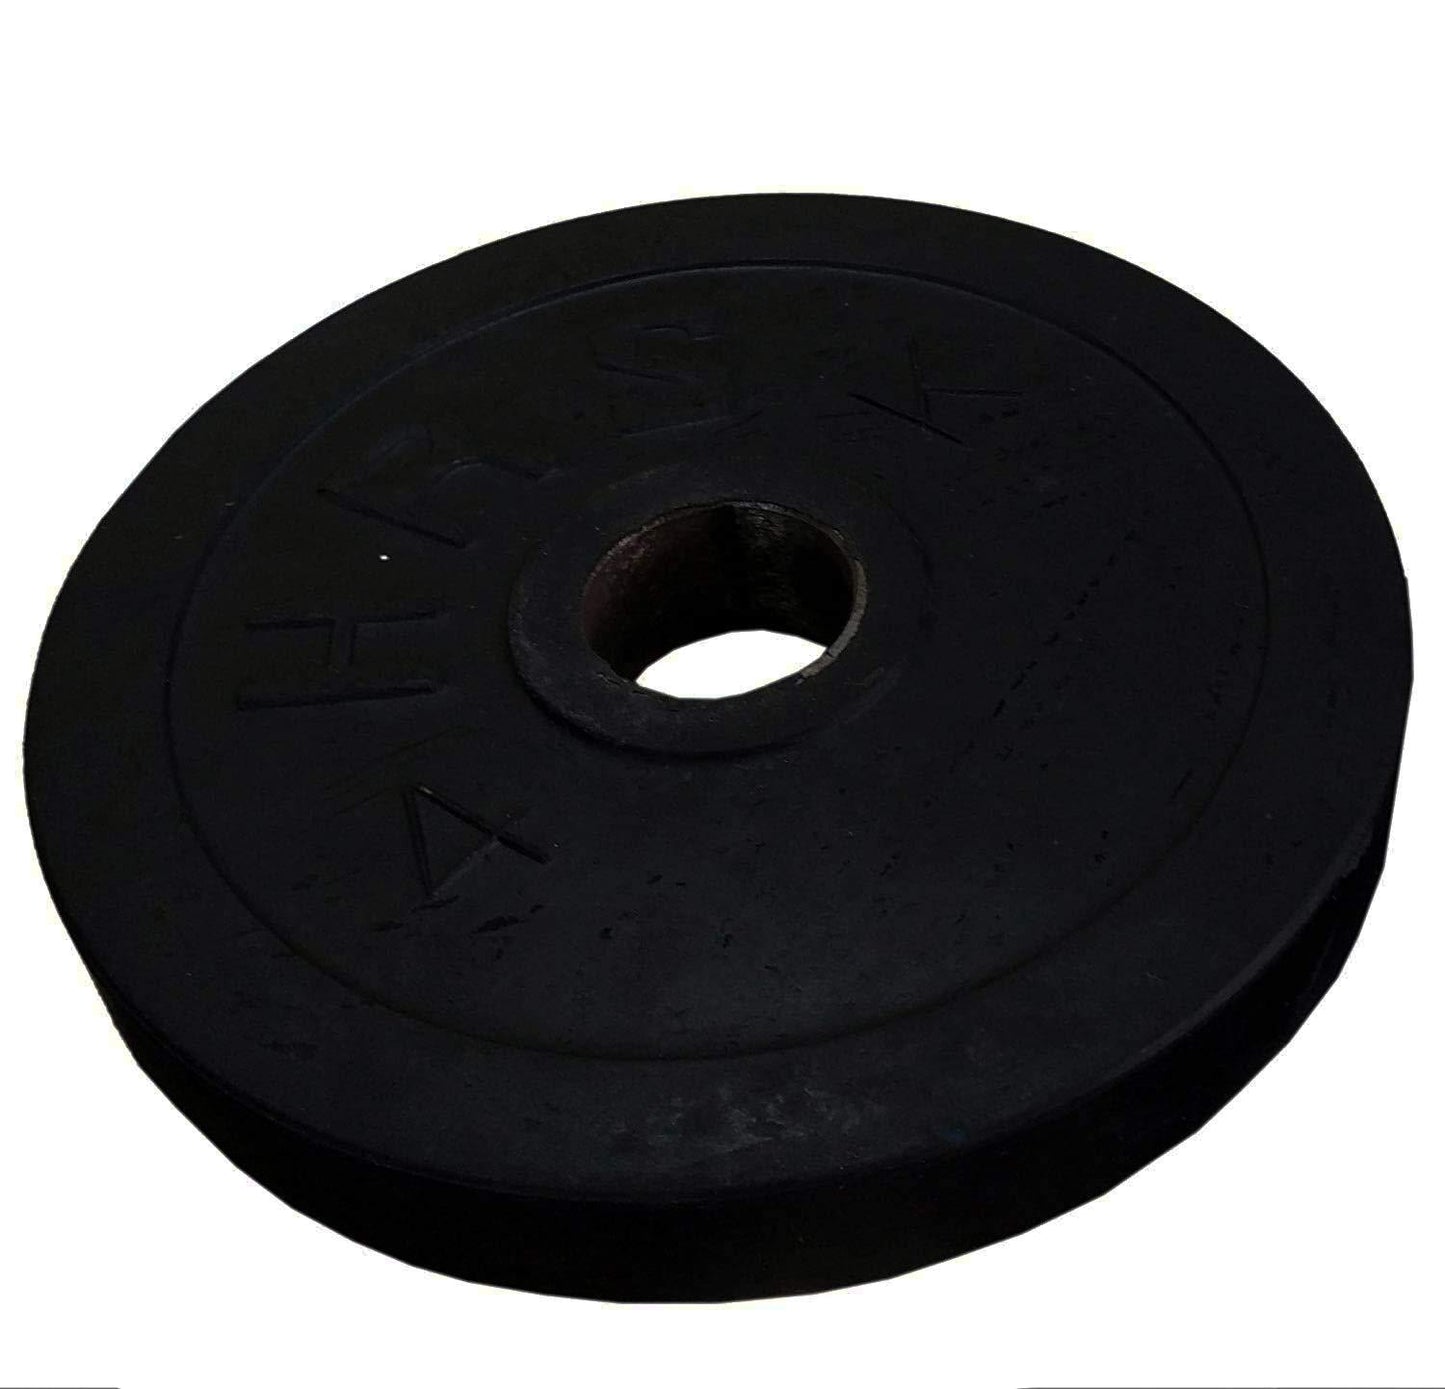 Prokick Rubber Weight Plate with Metal Bush 50 MM Bore, Black (Single) - Best Price online Prokicksports.com